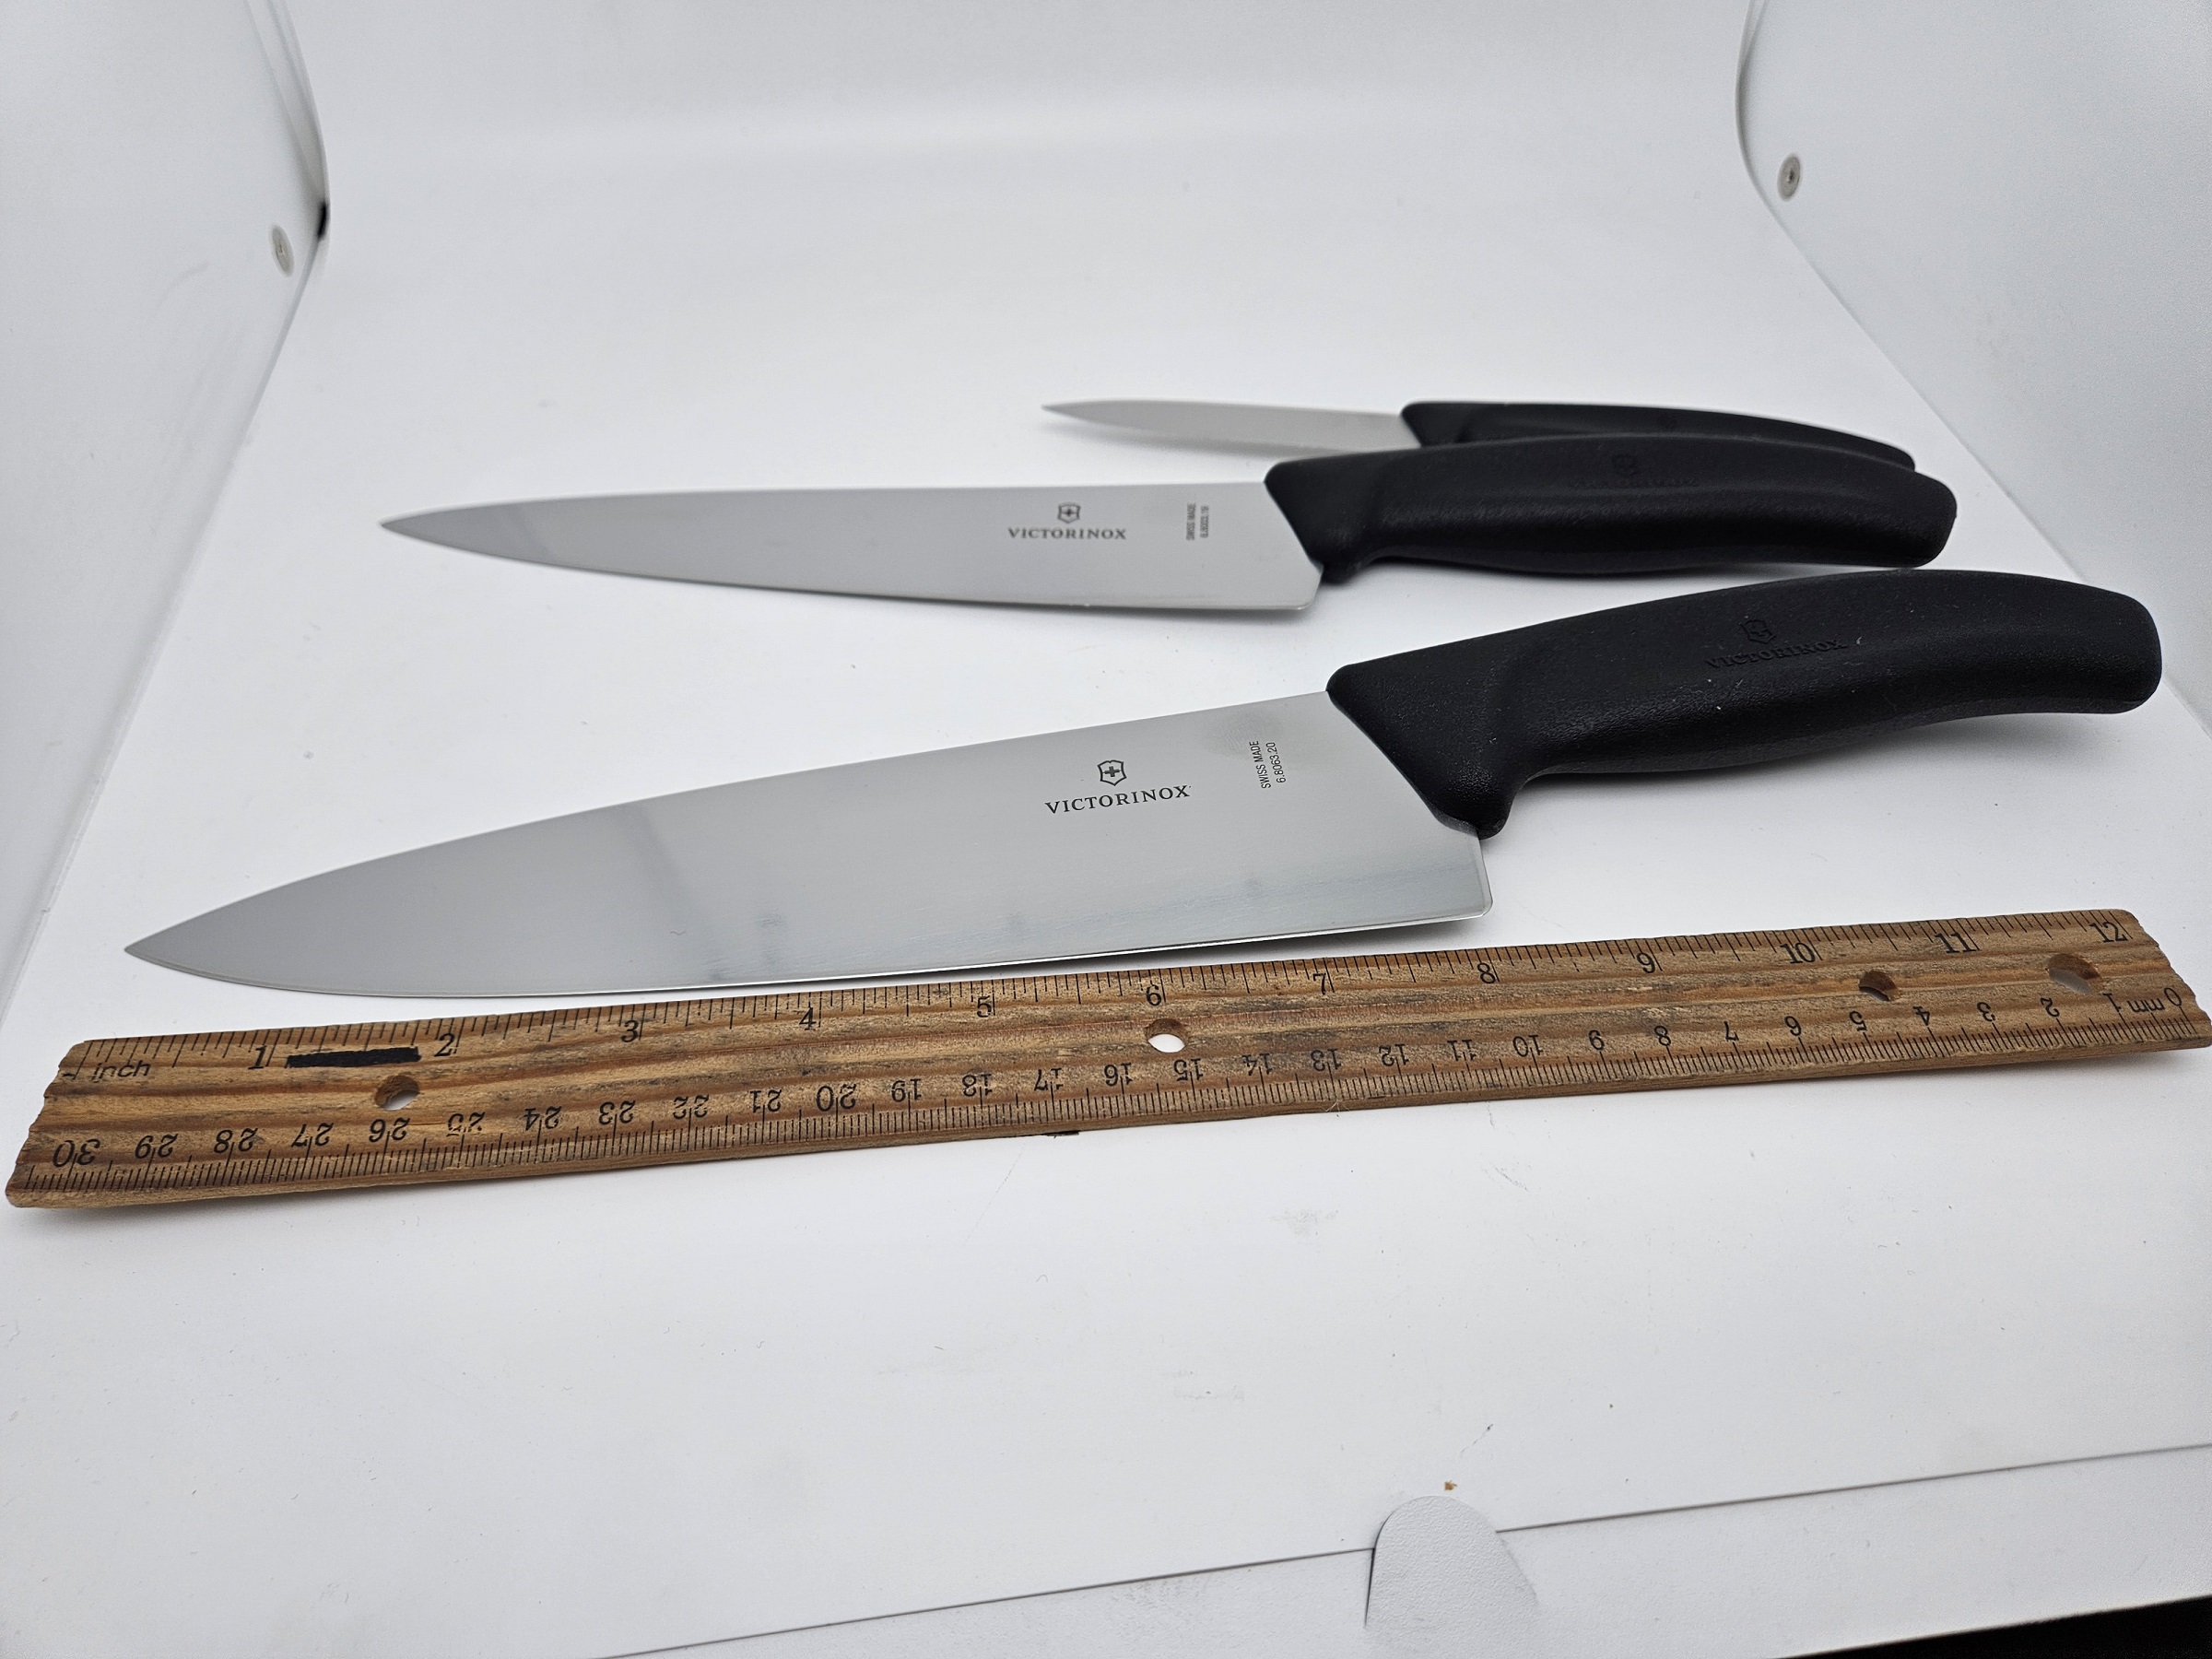 Victorinox Swiss Classic 3-Piece Knife Set